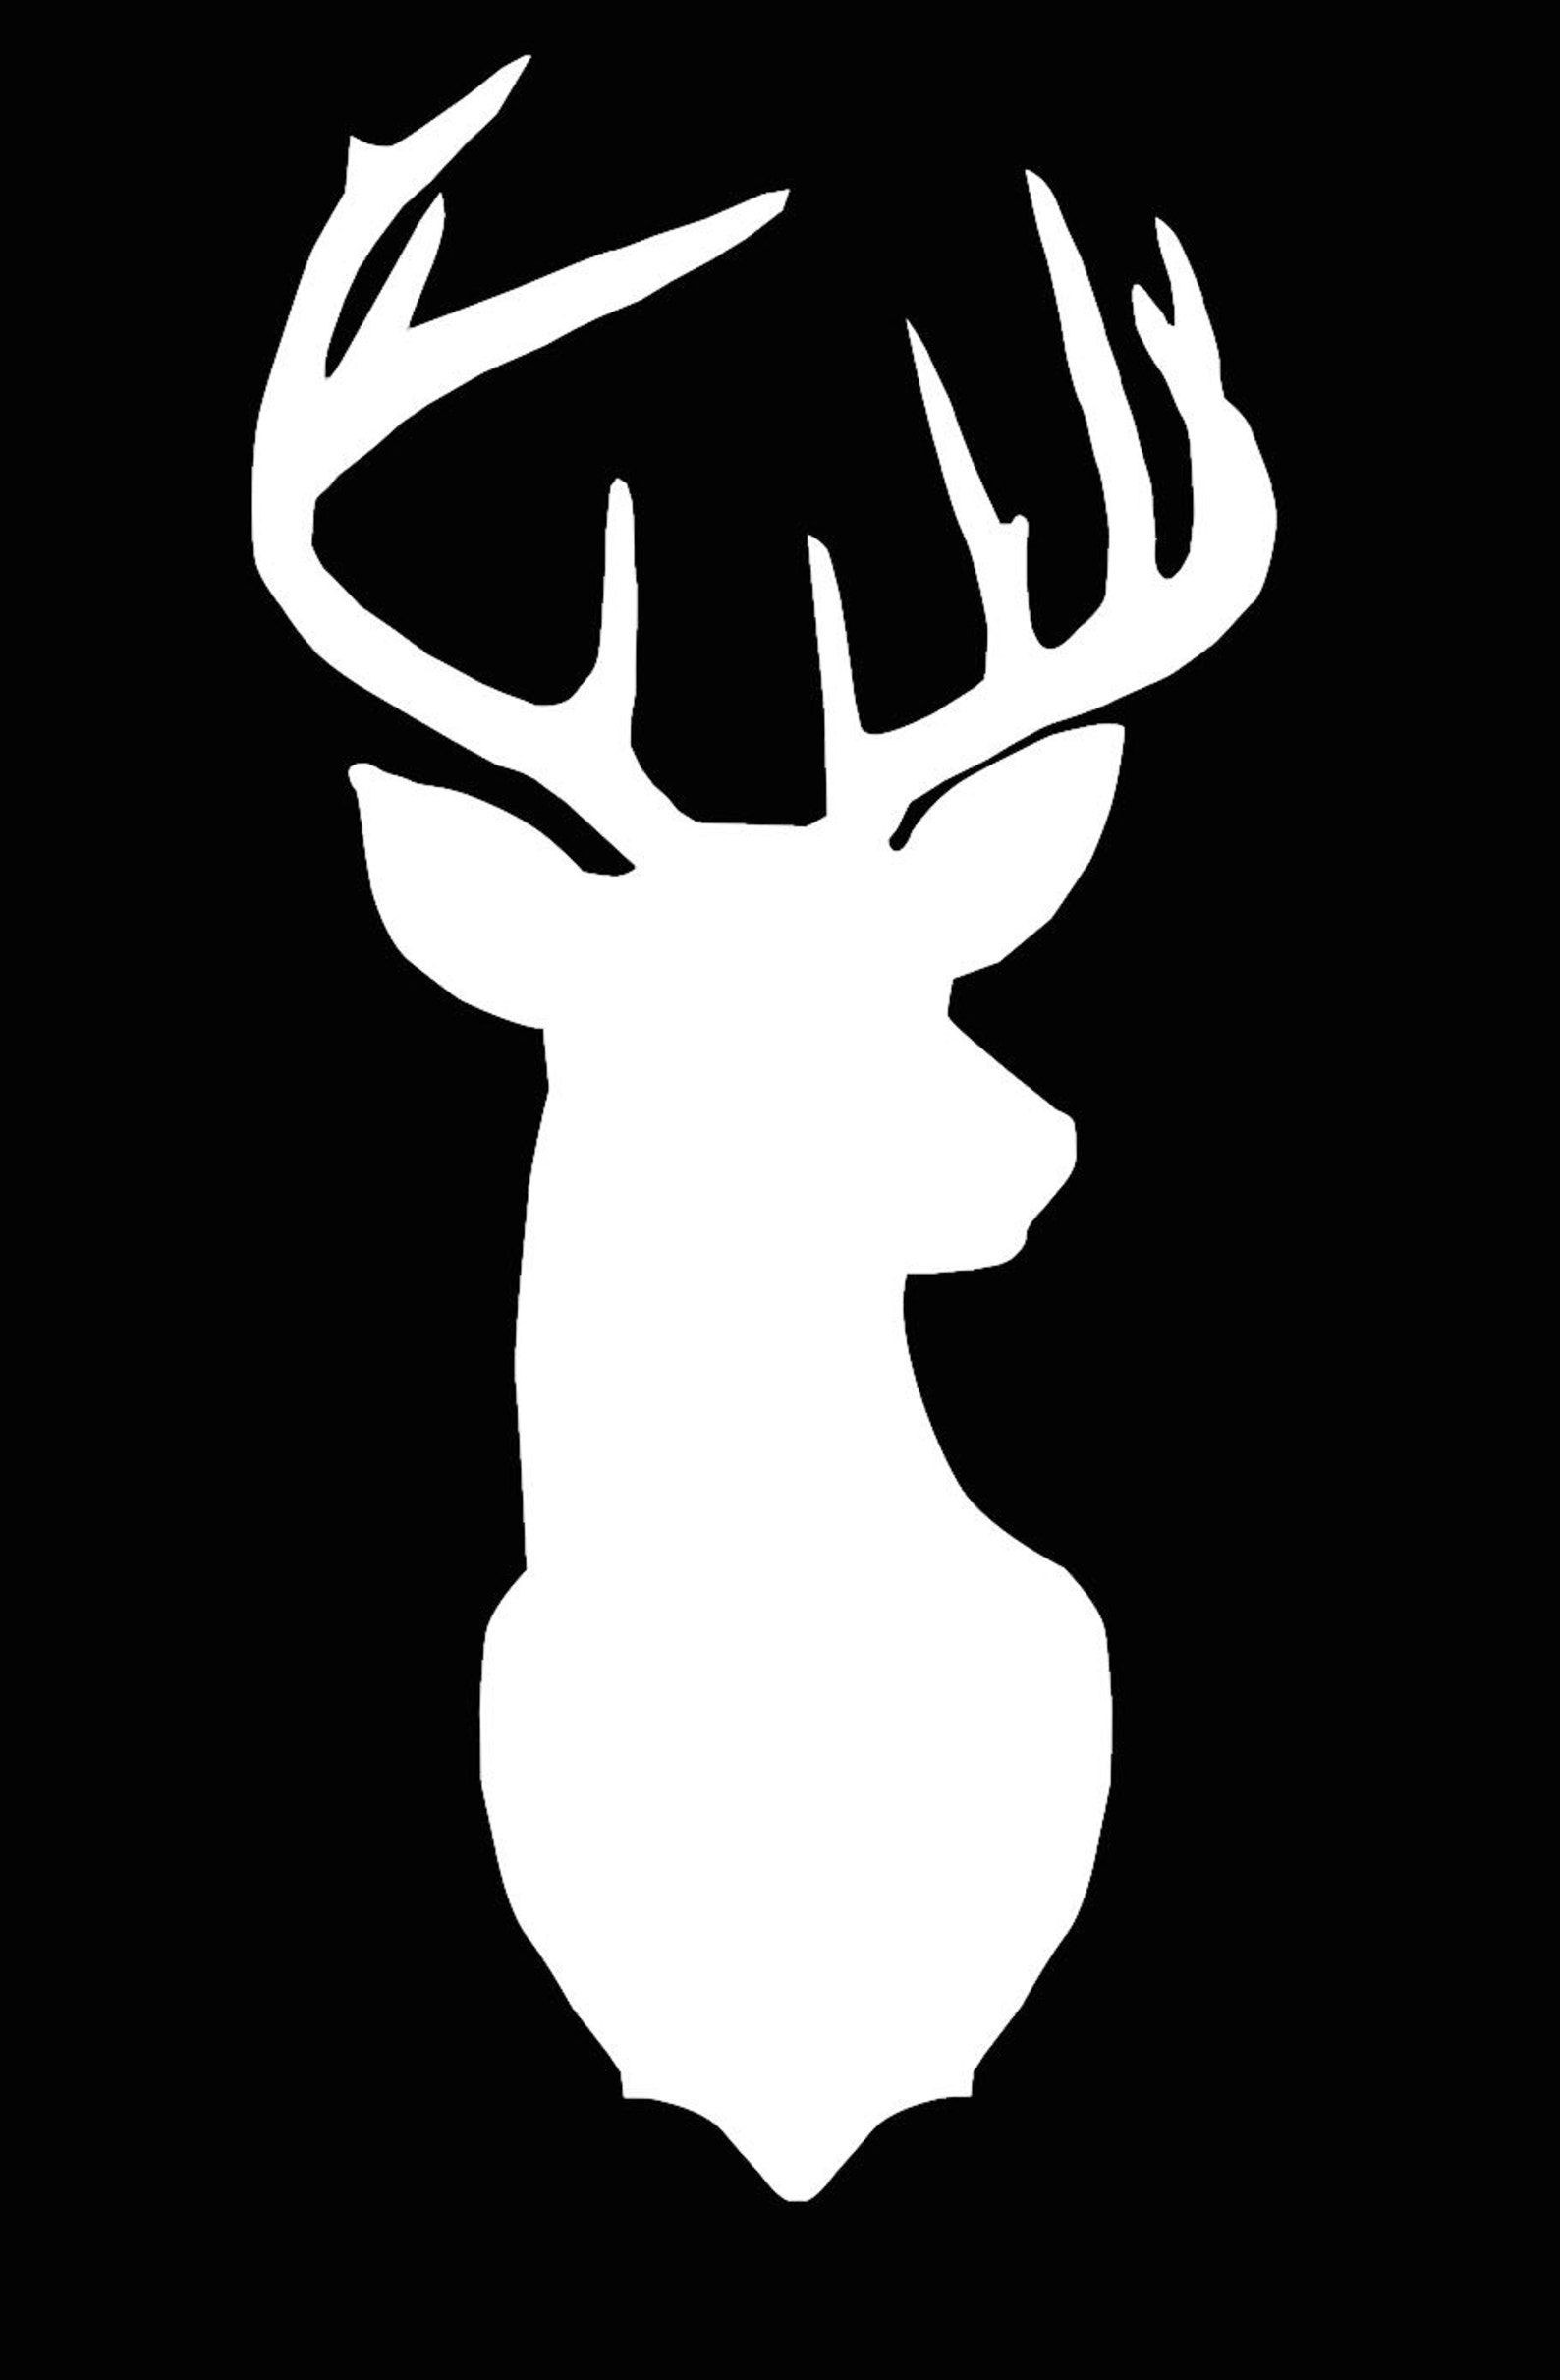 Deer Cameo Silhouette File - Etsy